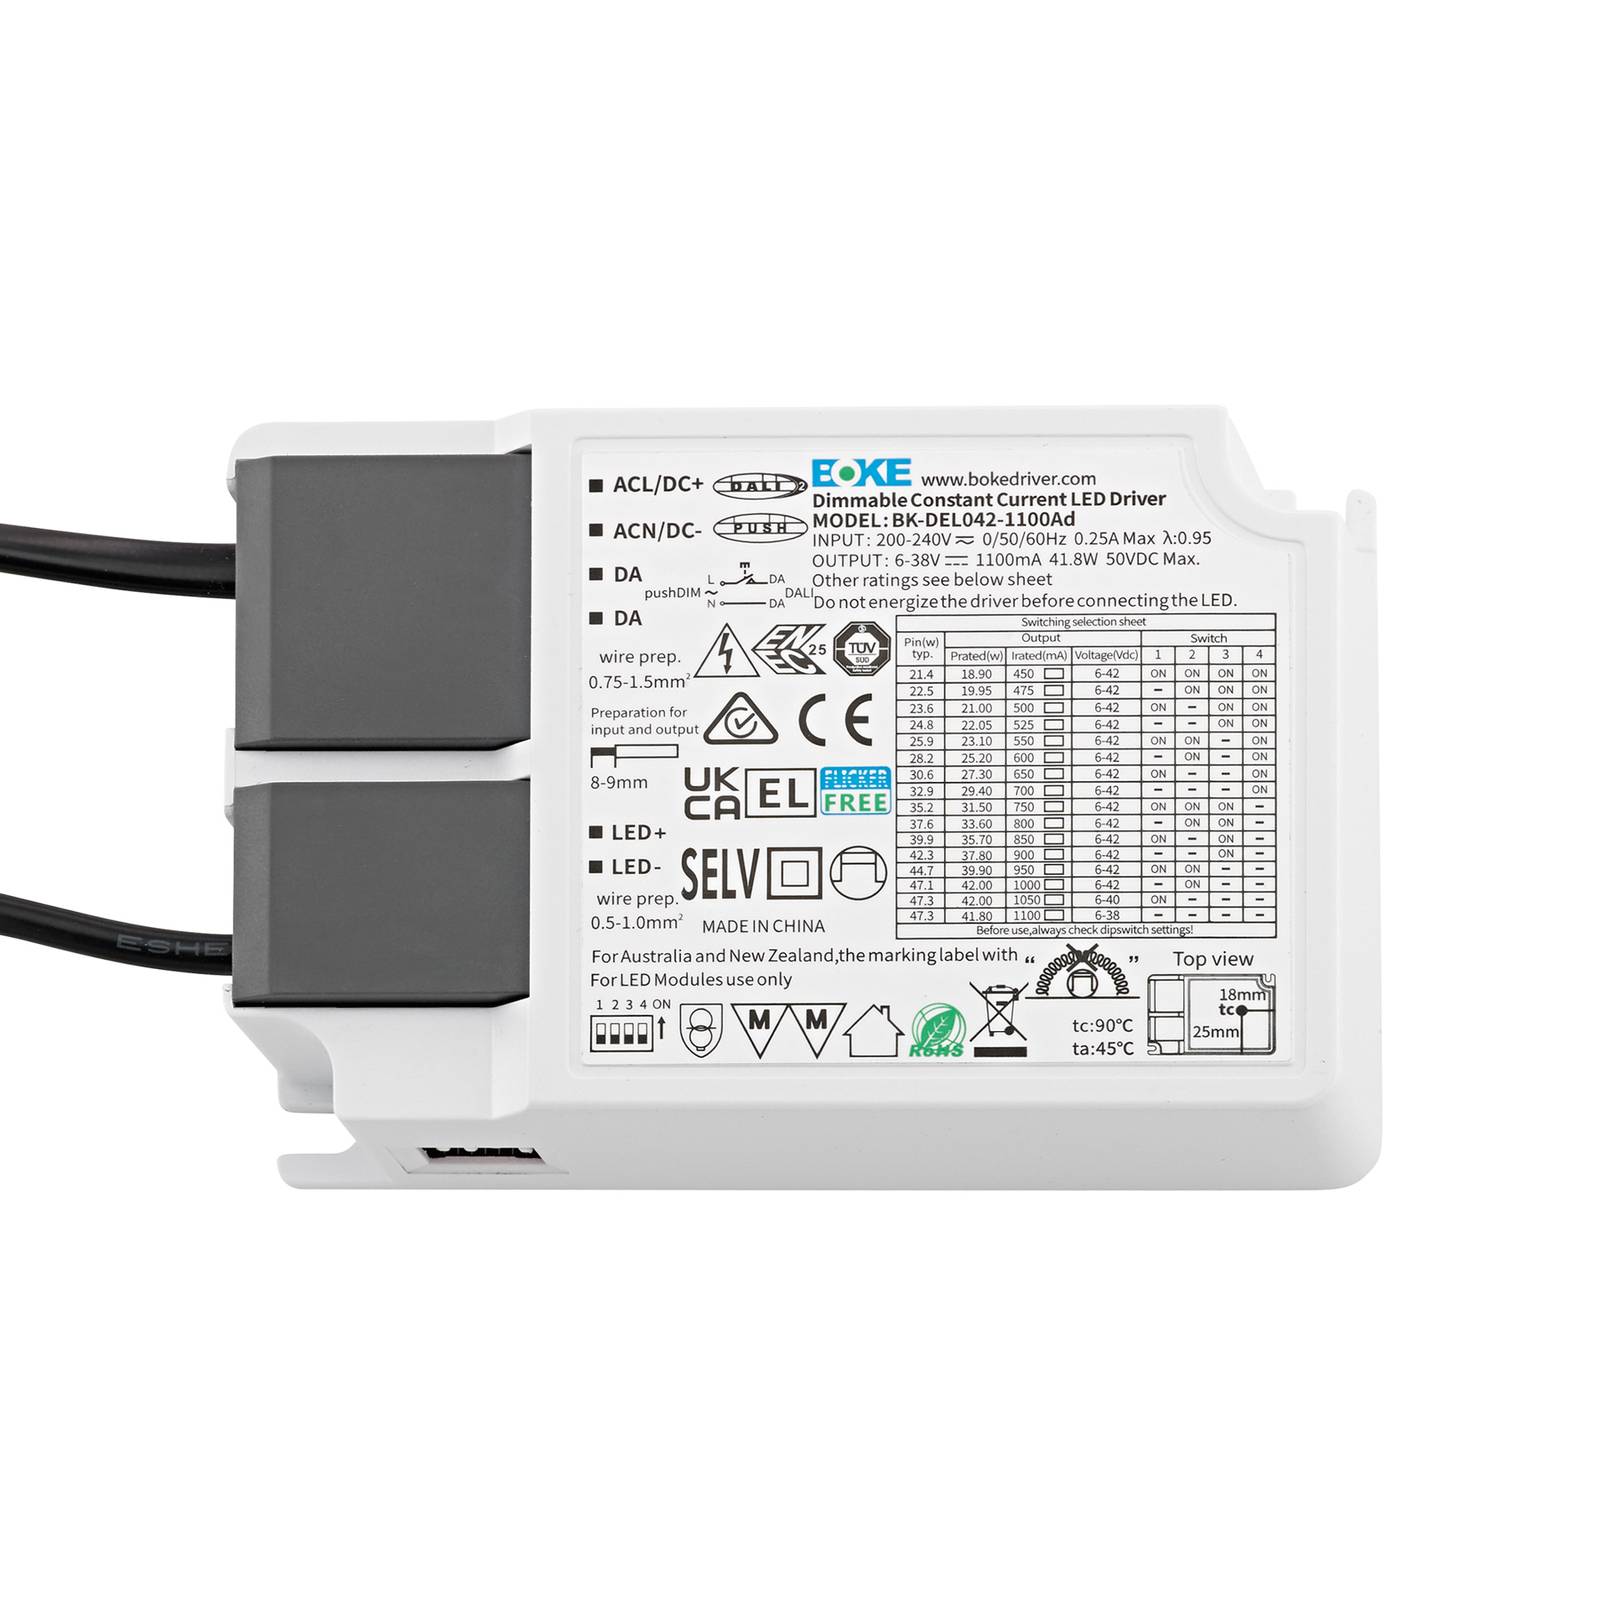 Sigor LED ovladač Powerline Panel CC, DALI, 42 W, 450 - 1100 mA